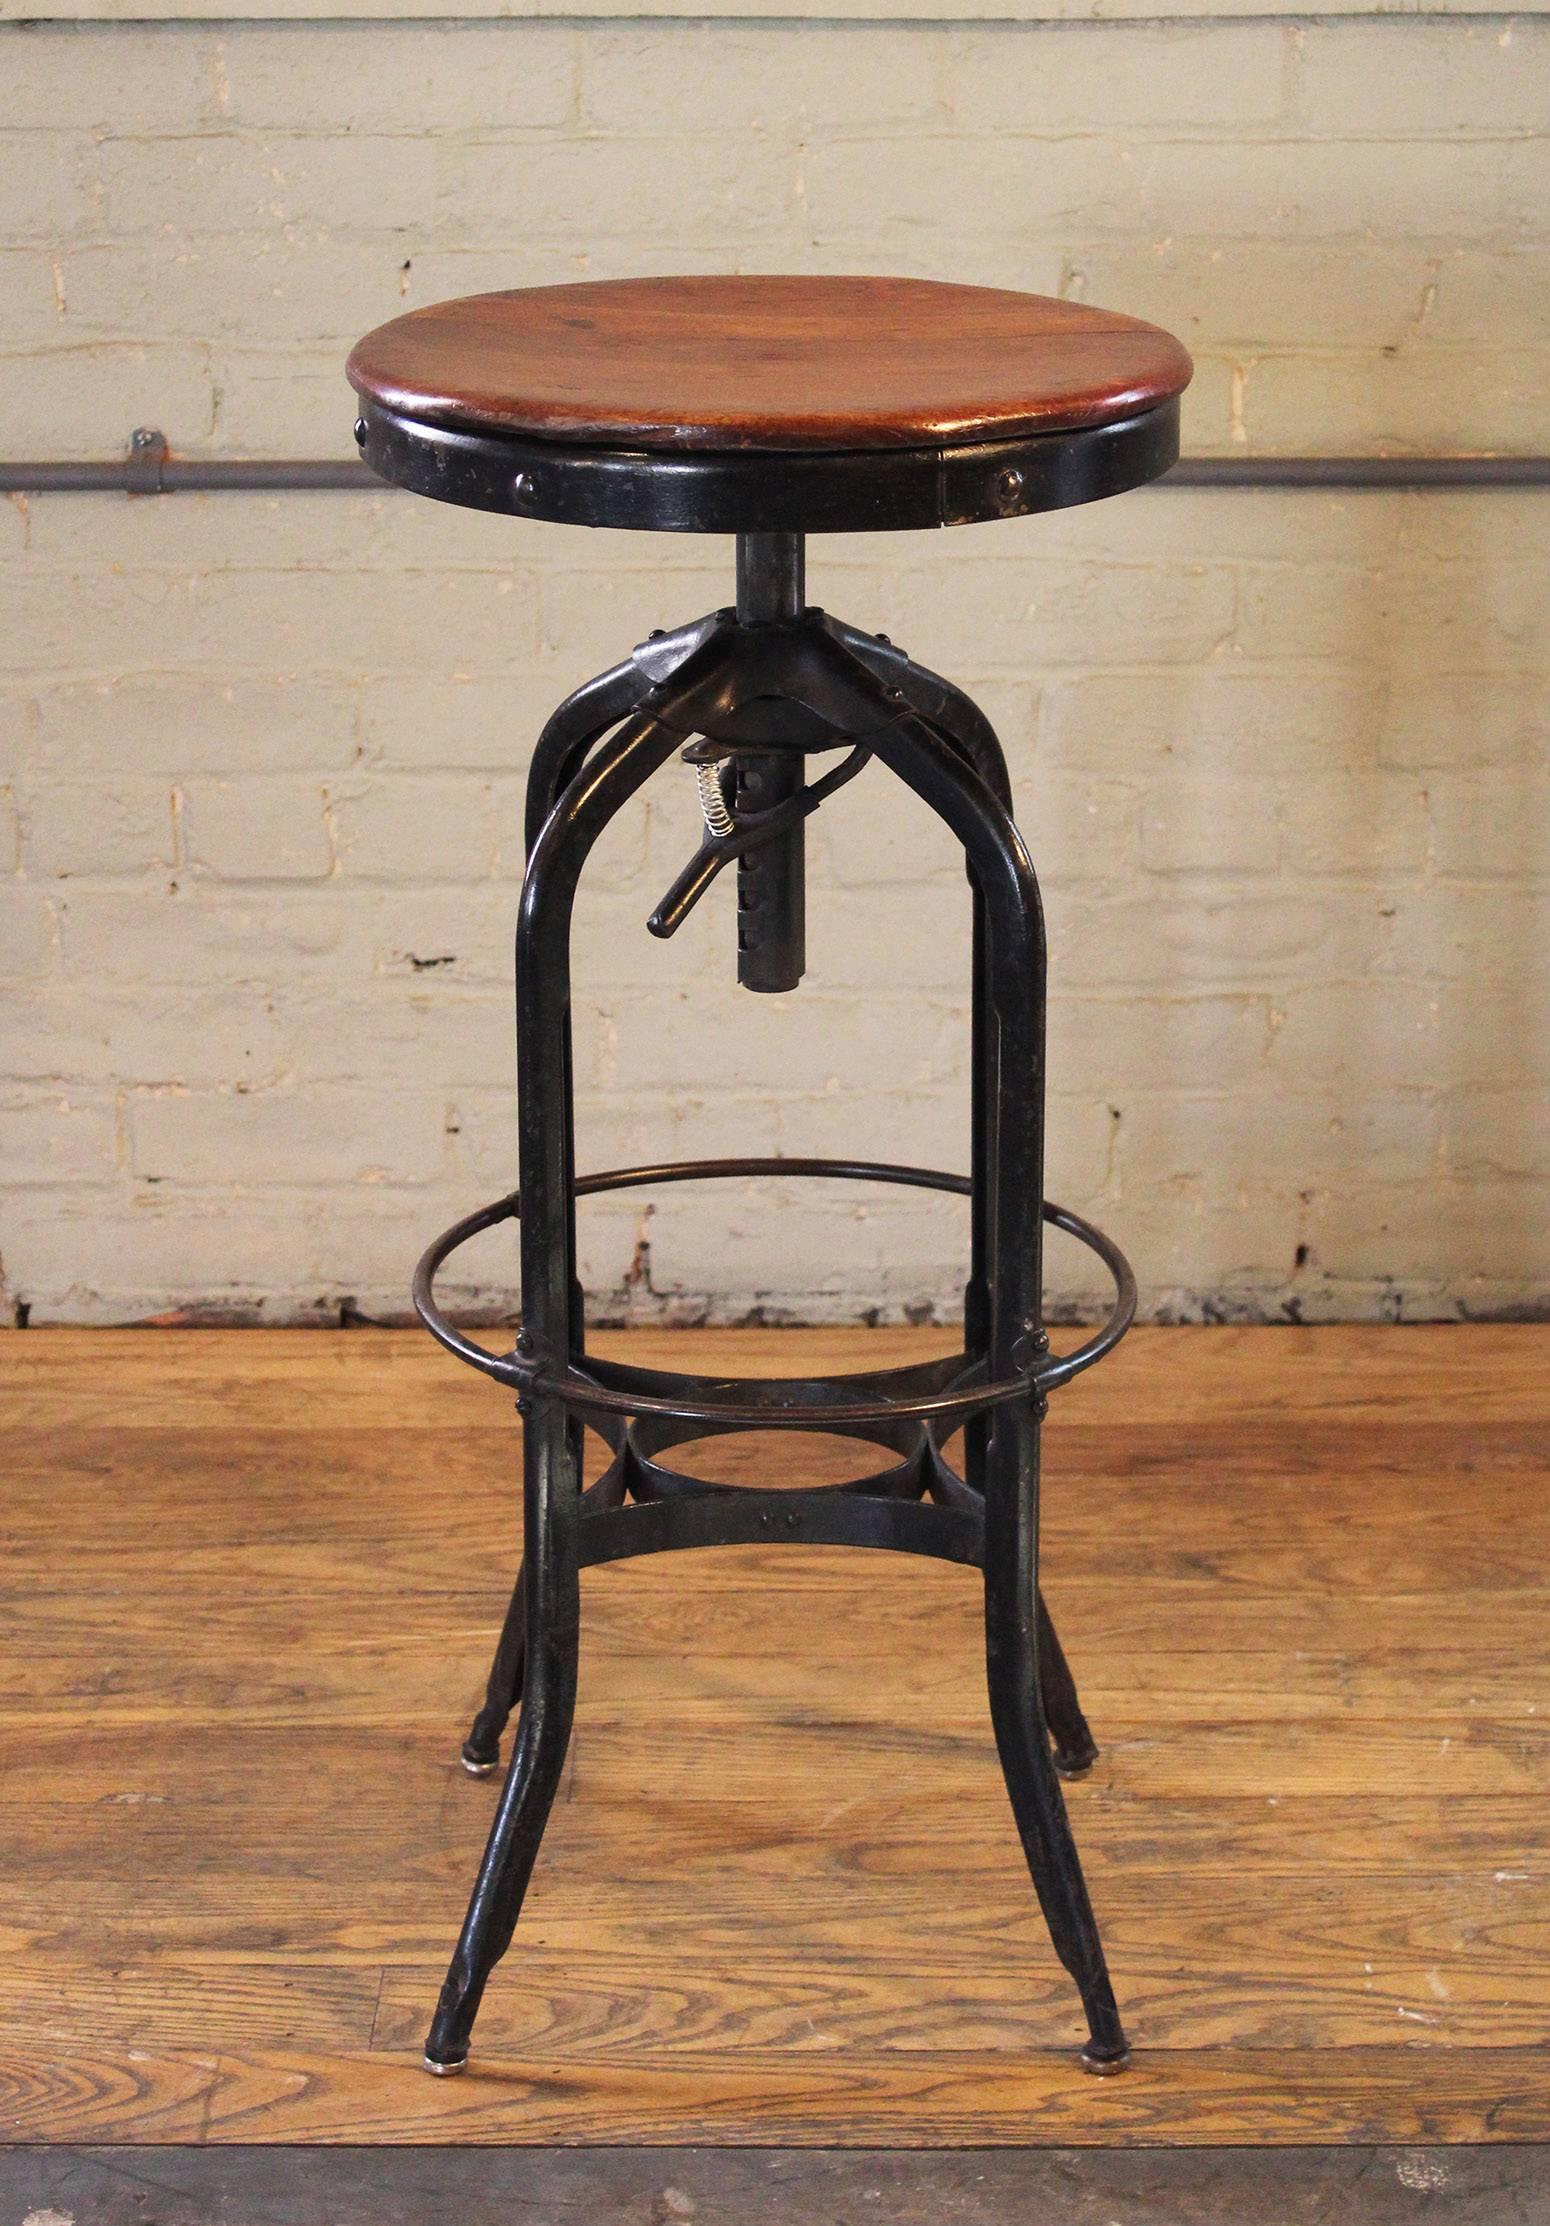 Original vintage Industrial Toledo backless wood and metal adjustable bar stool. Black base. Seat height is adjustable from 28 1/2